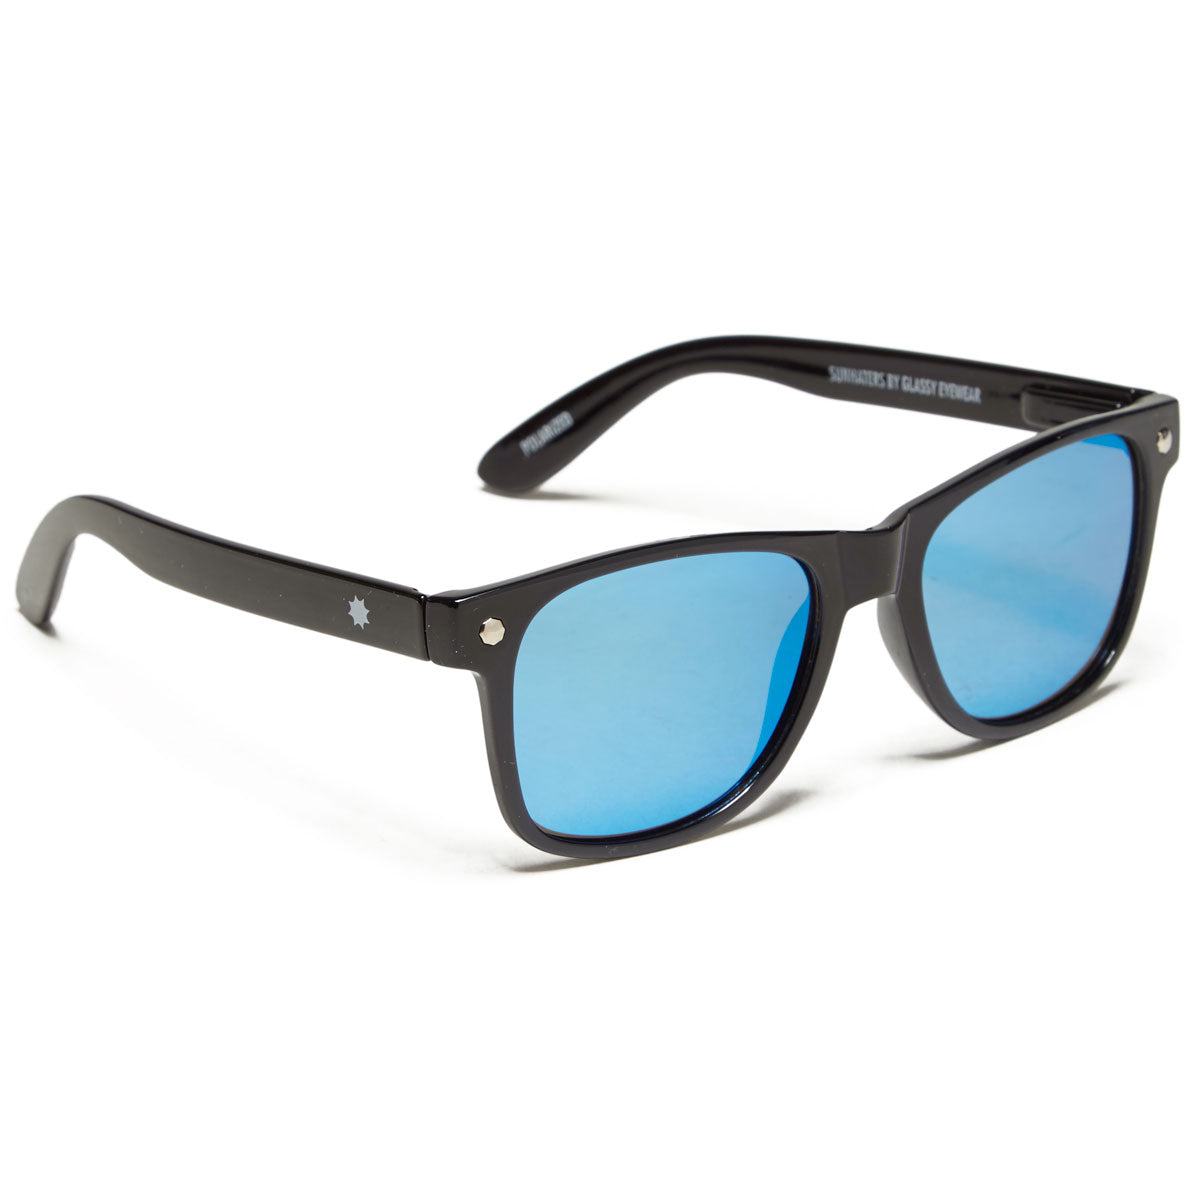 Glassy Leonard Polarized Sunglasses - Black/Blue Mirror image 1